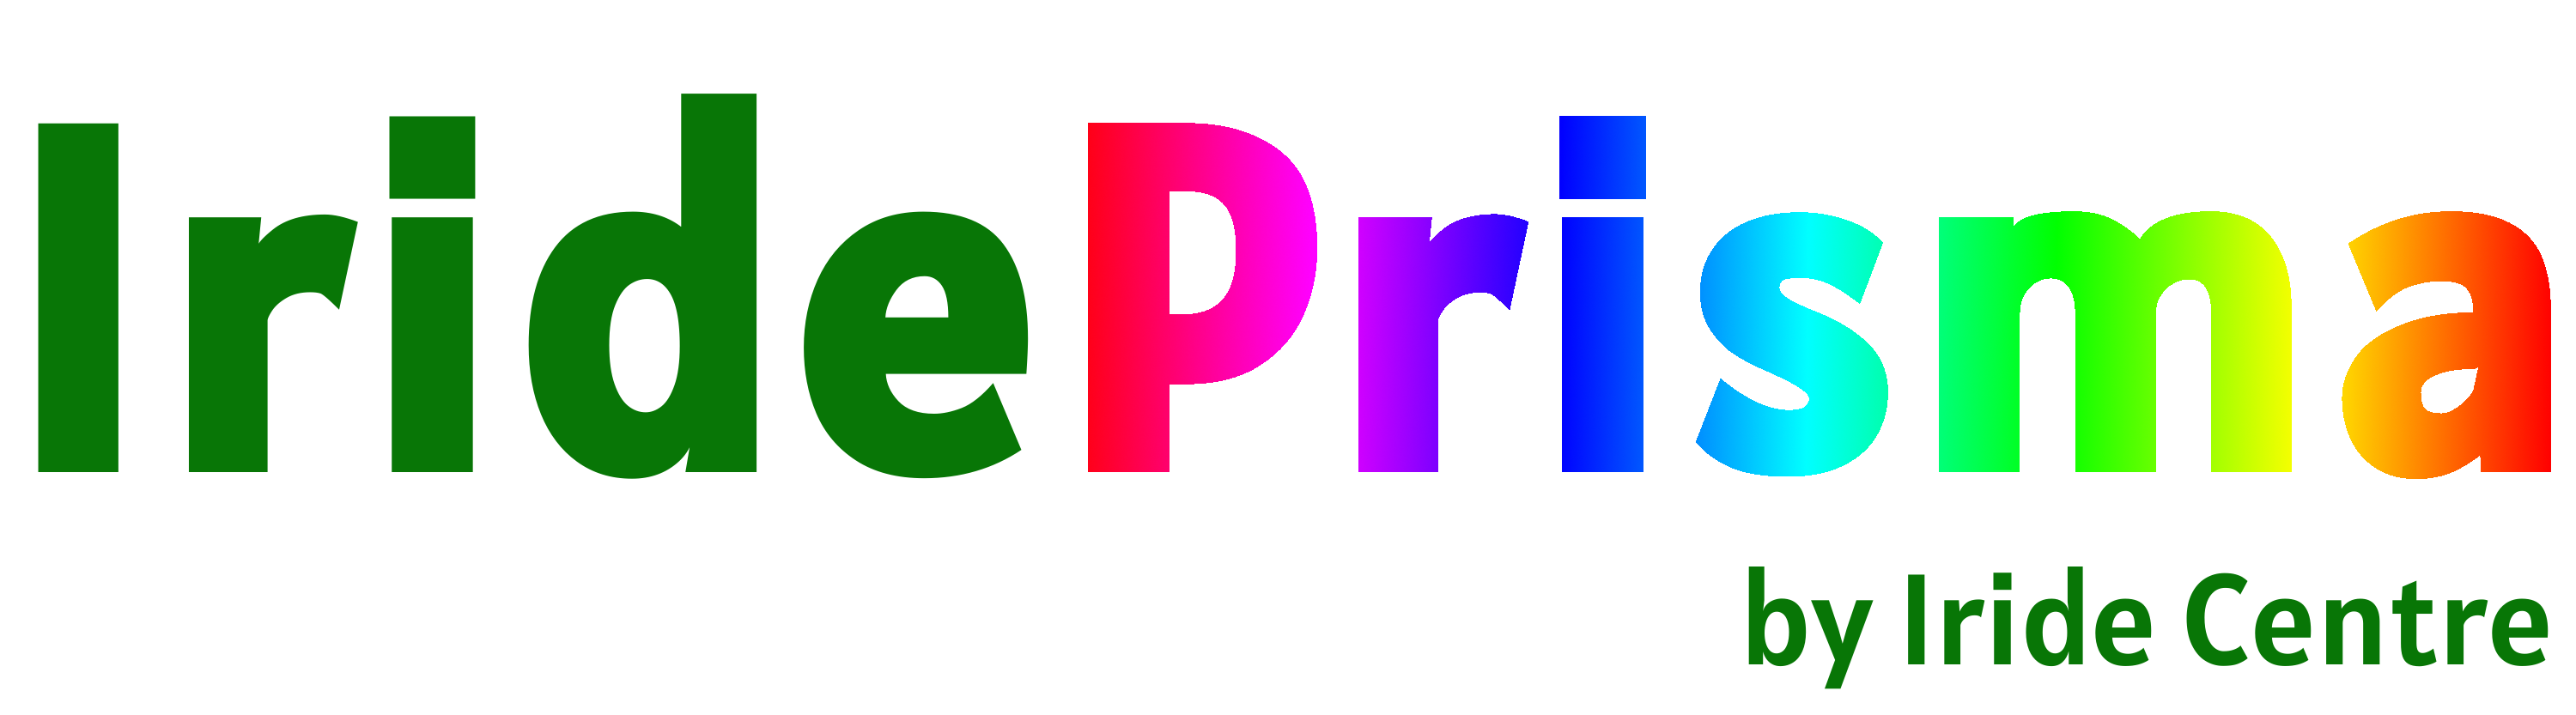 Logo Prisma bez tła